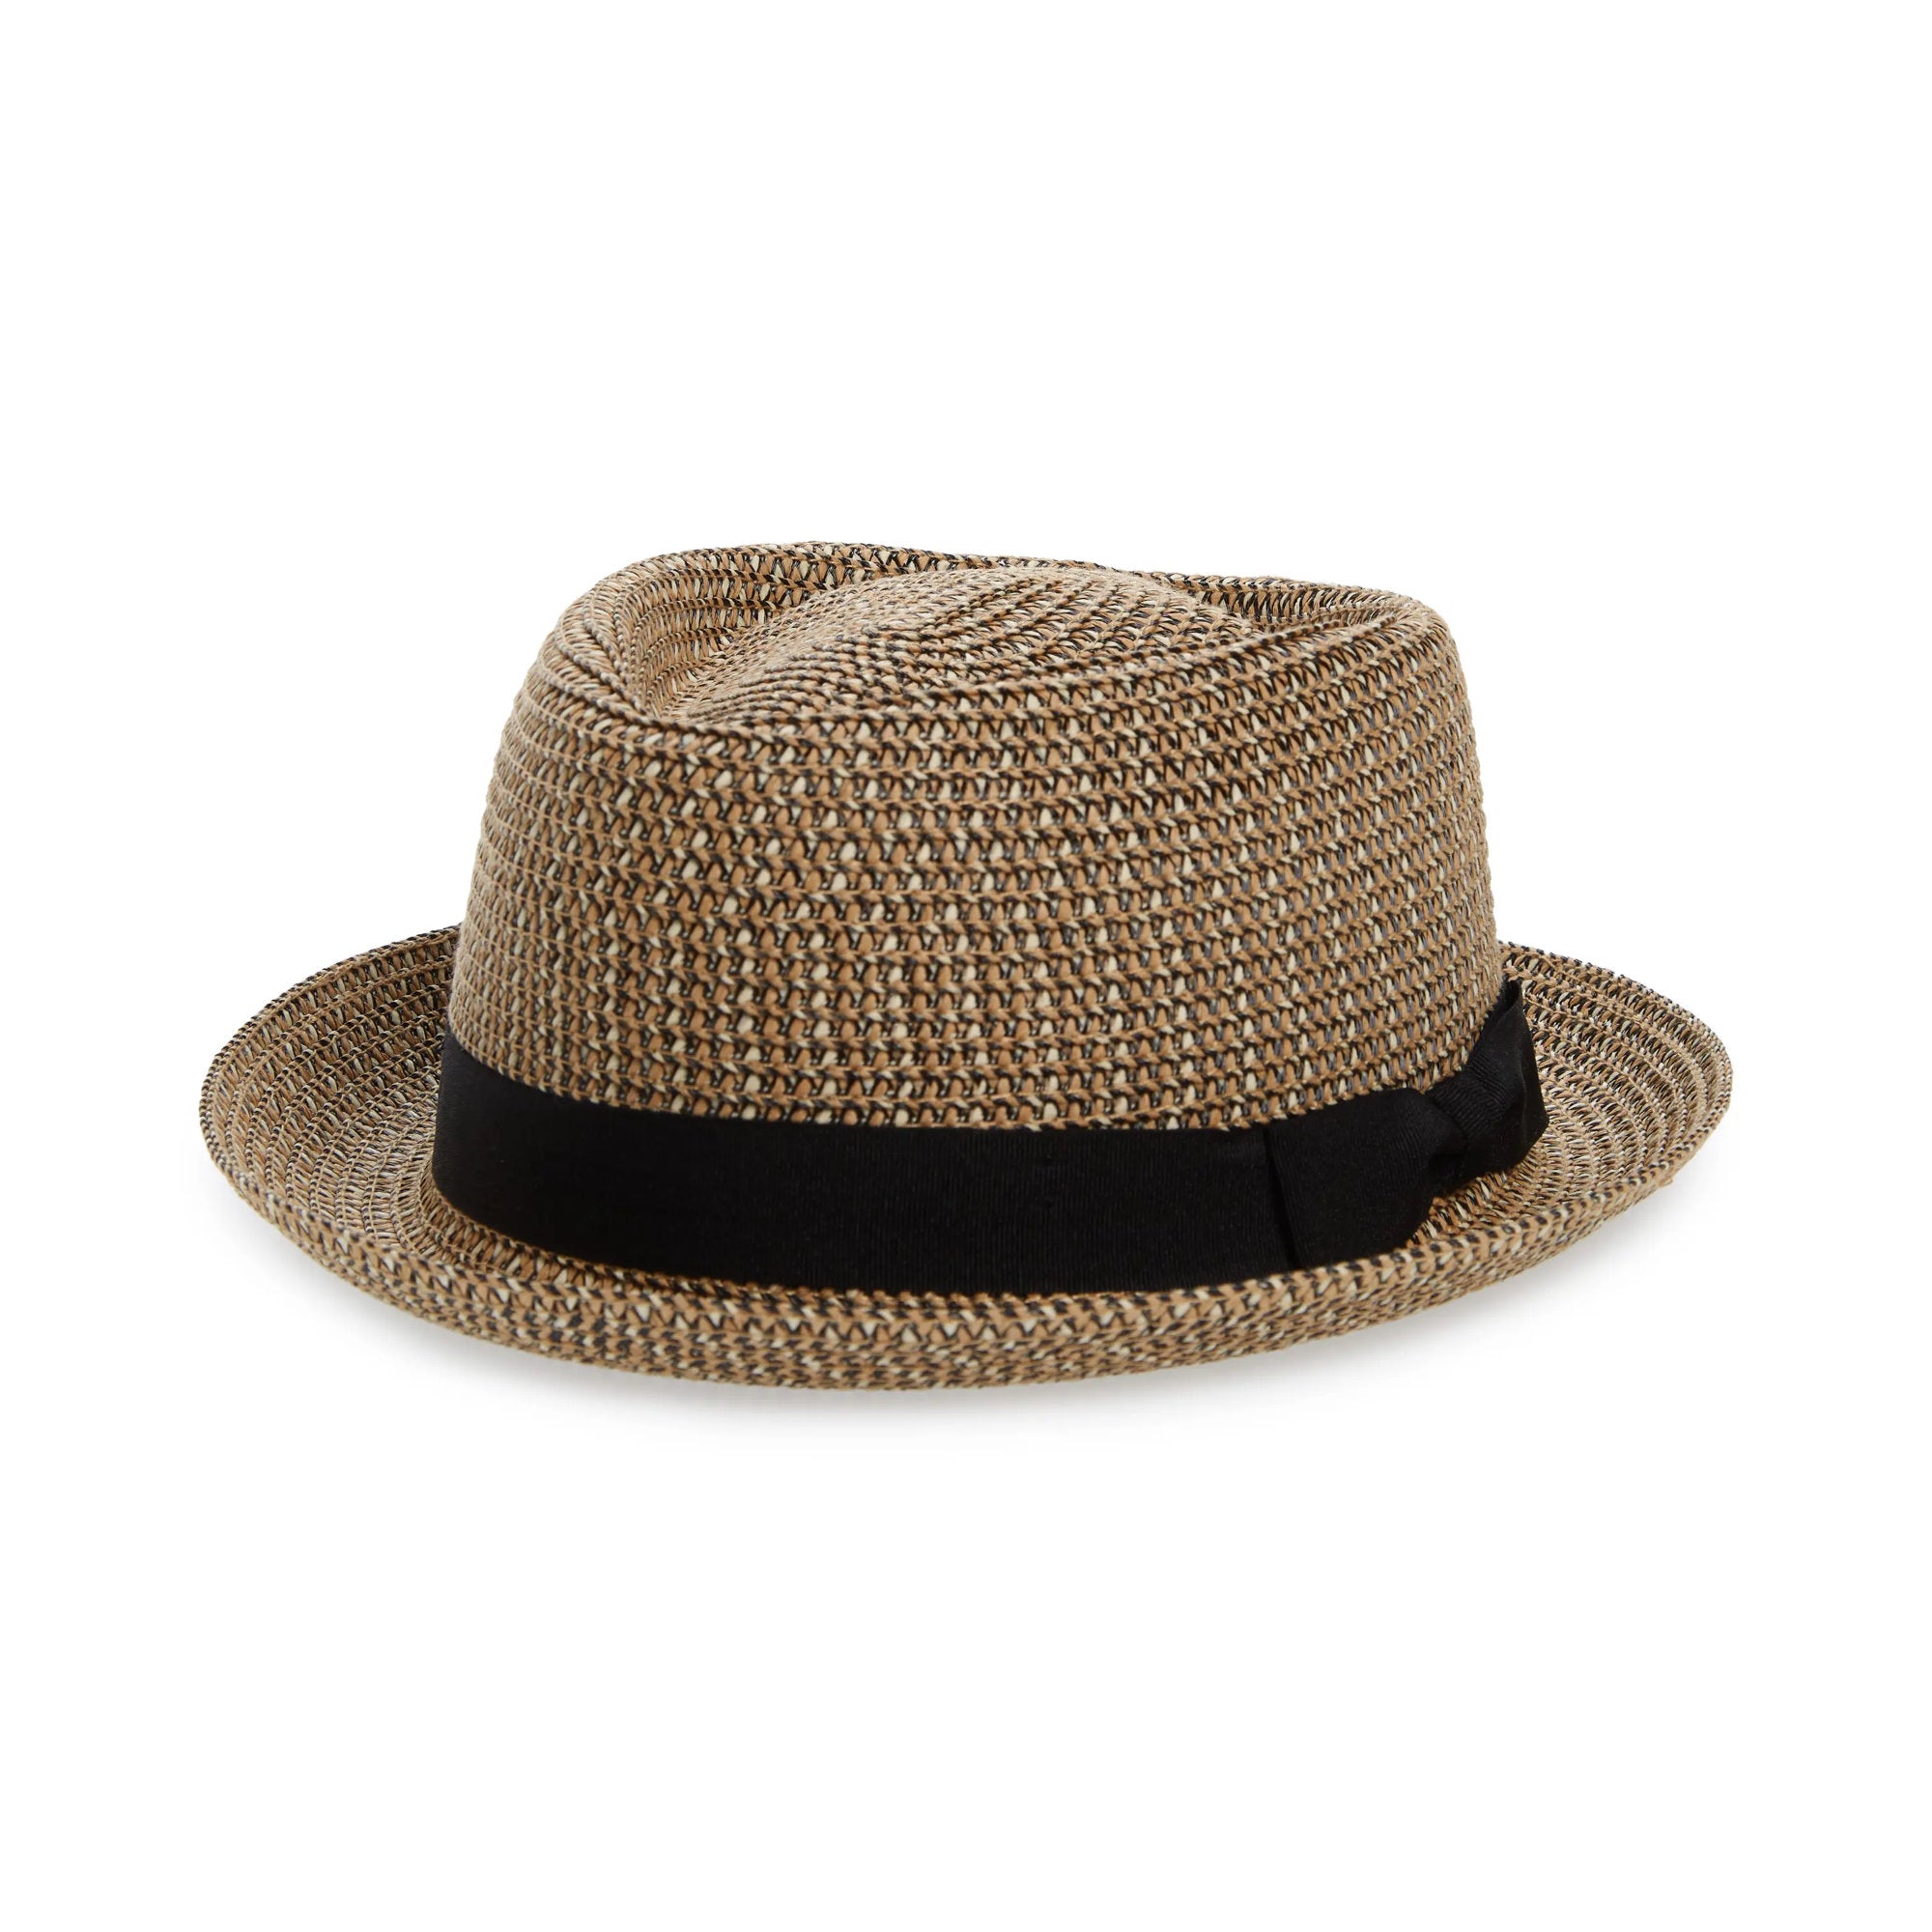 Goorin Bros. Low Country Straw Porkpie Hat - Natural - 1 - Accessories - Brimmed Hats